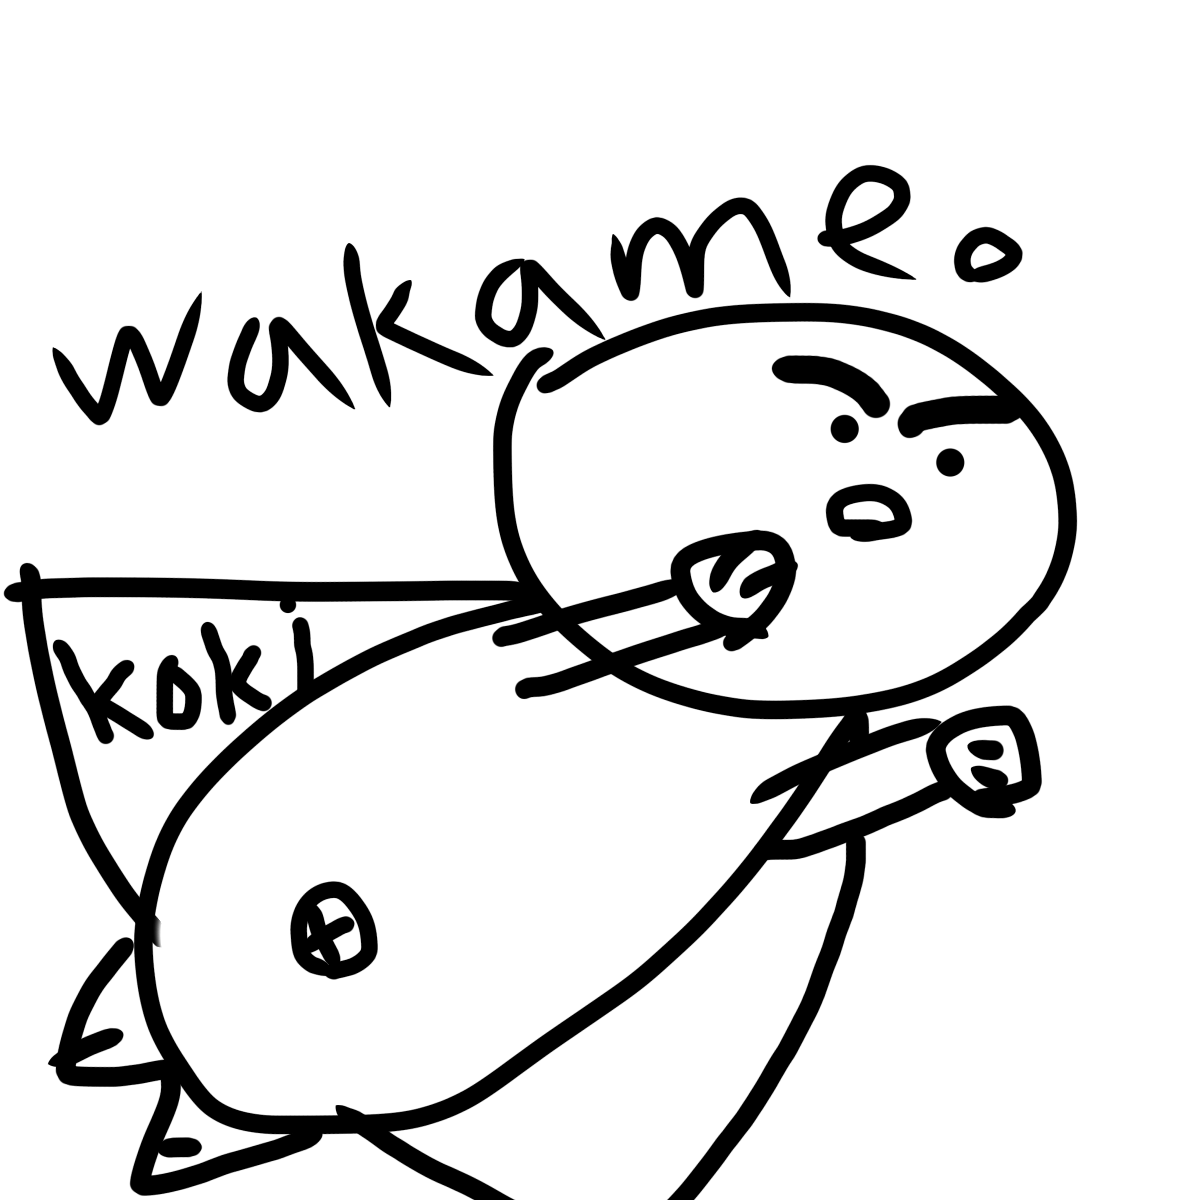 wakame-kk